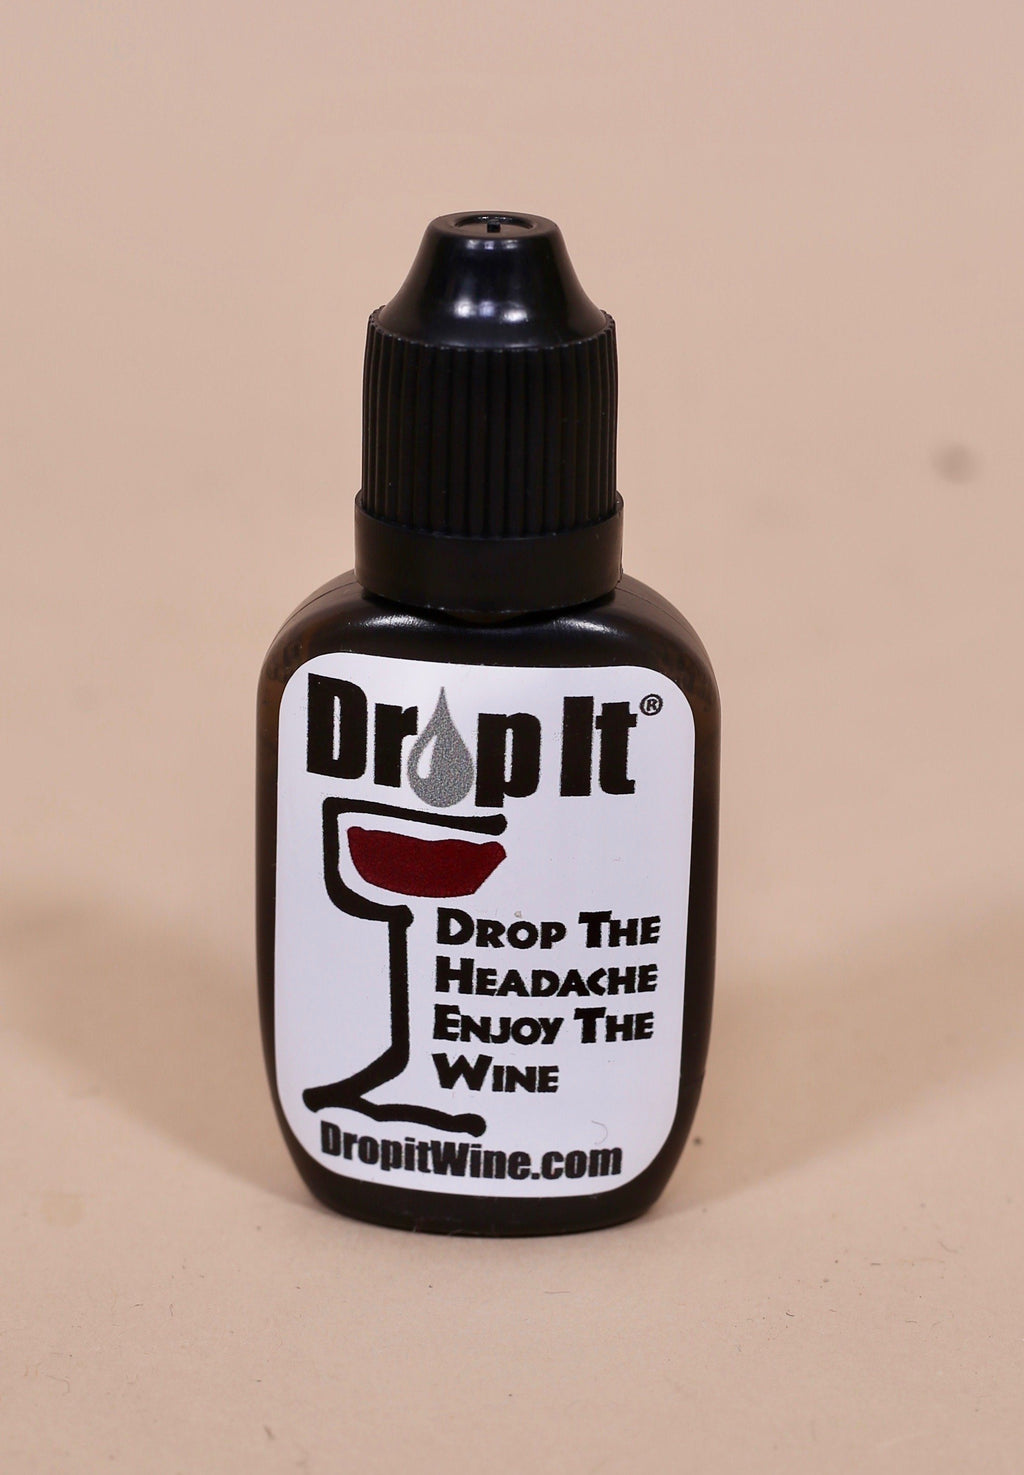 Drop It® ORIGINAL - DROP IT® ENJOY WINE AGAIN